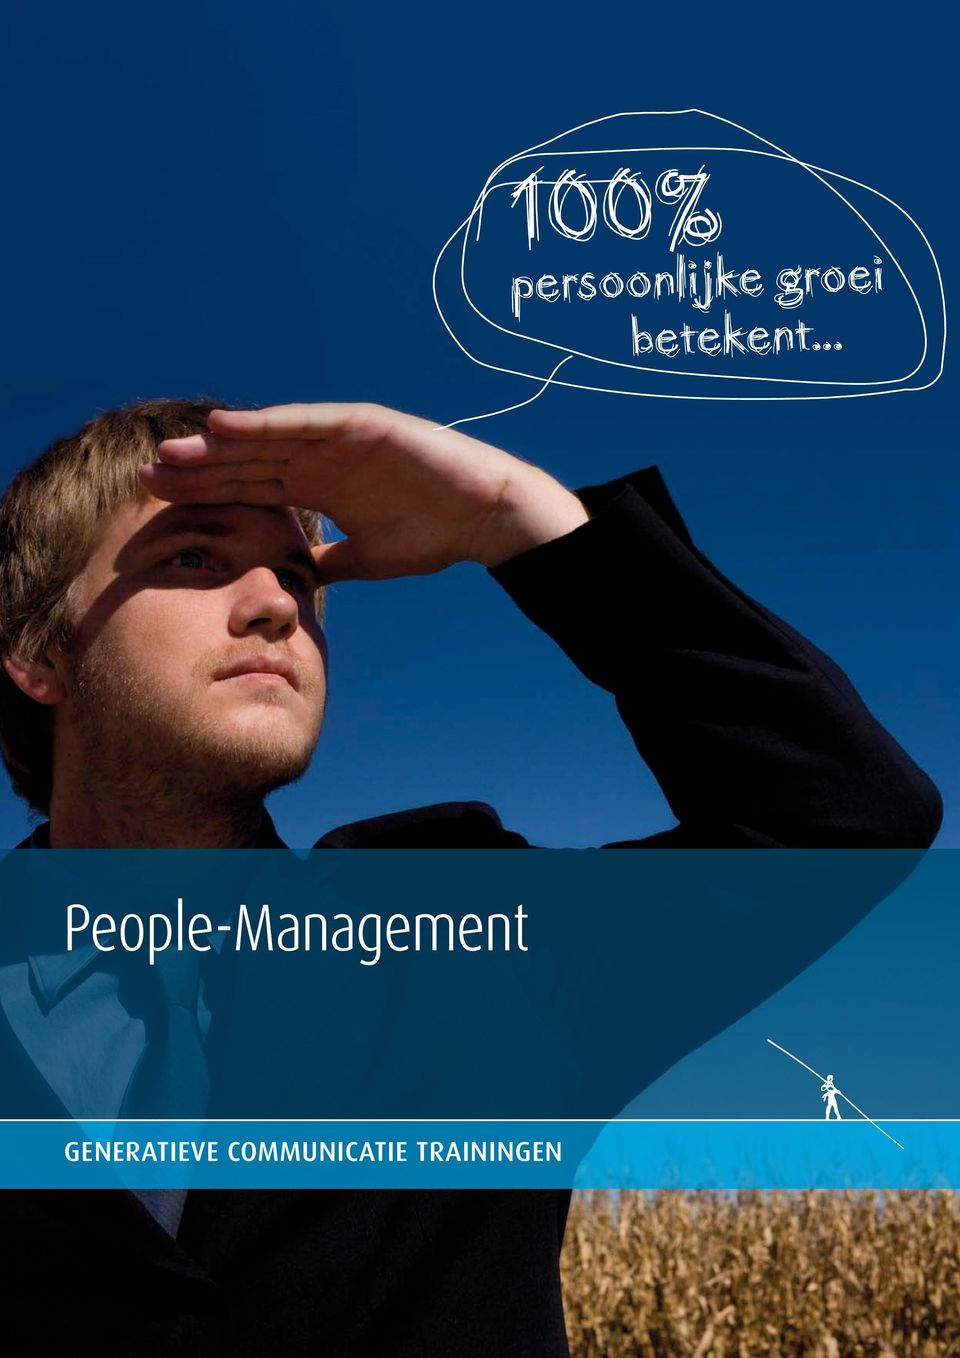 .. People-Management